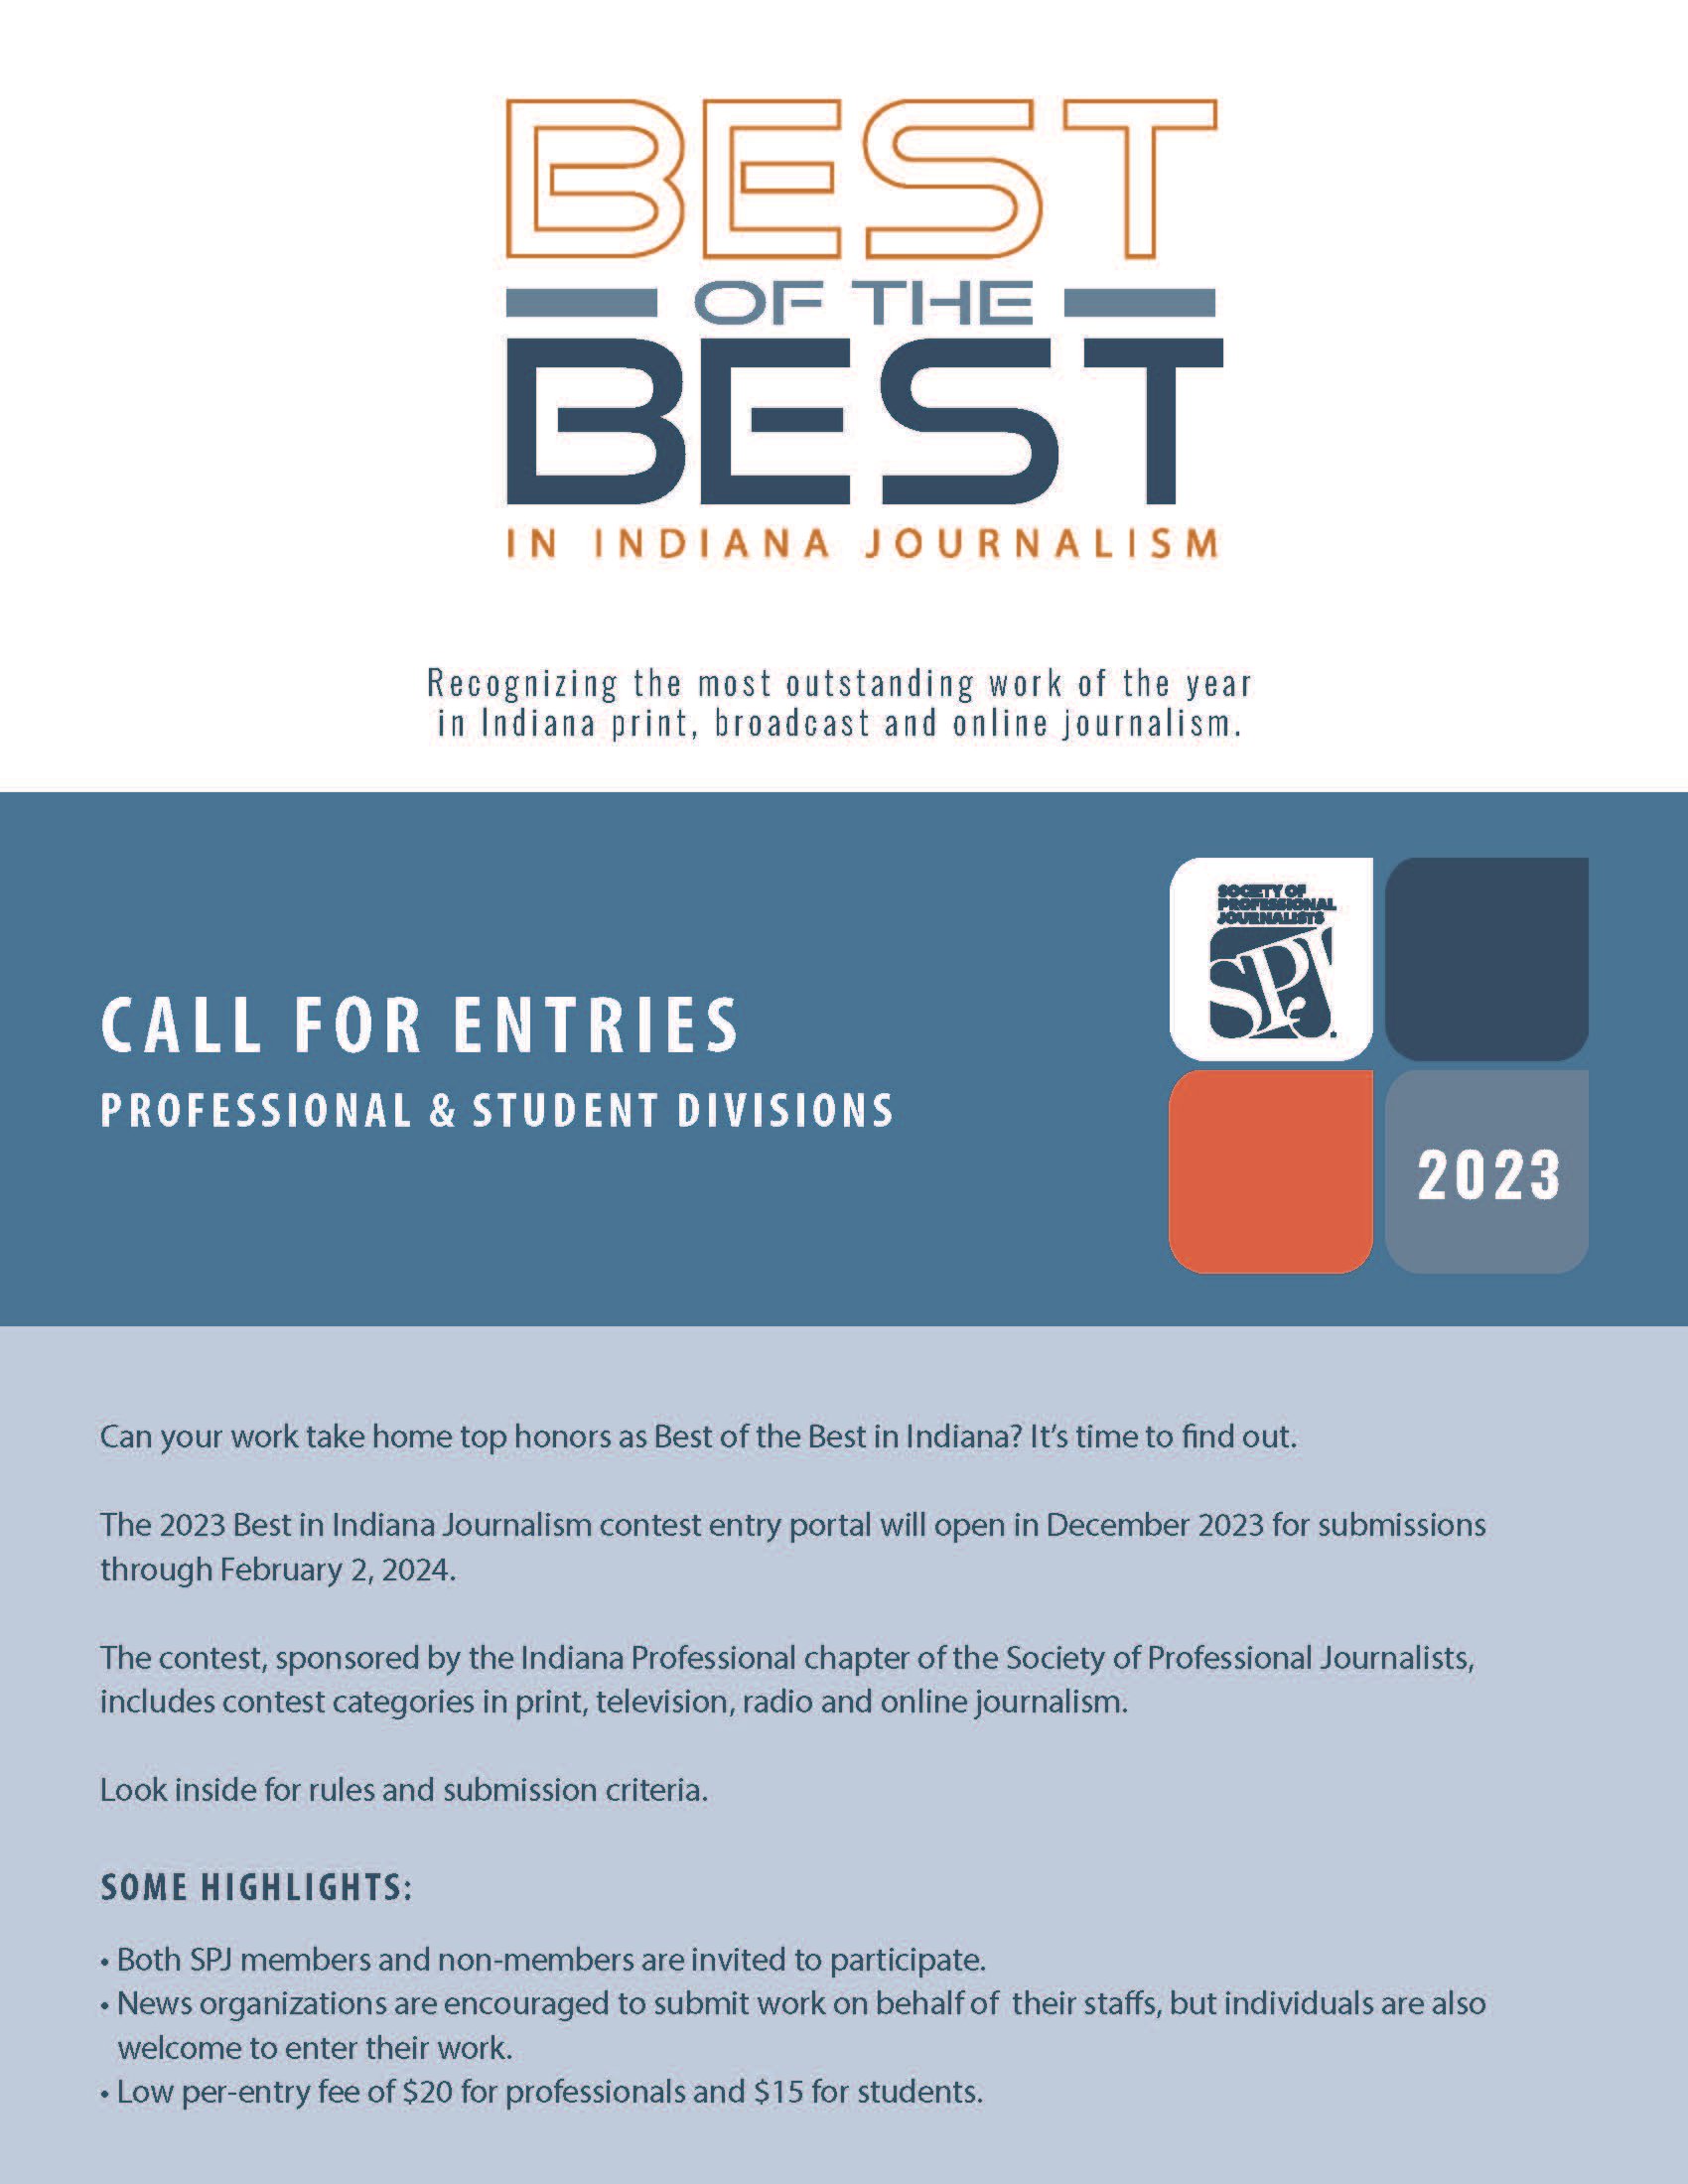 CallForEntries-SPJ-Indy-Best_of_Indiana_Journalism-2023_edited_Page_1.jpg